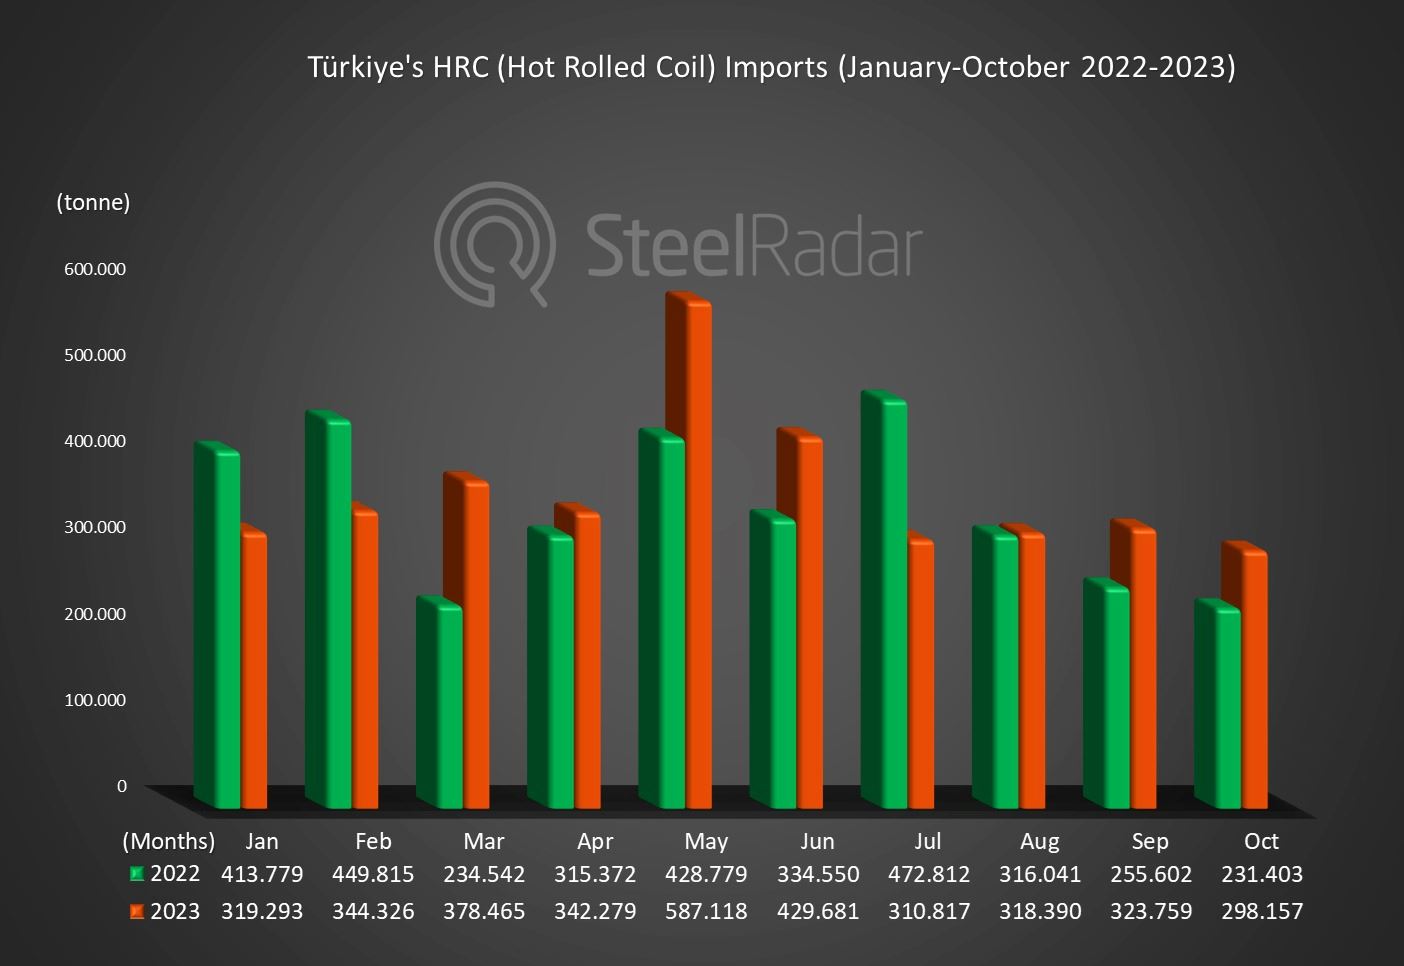 Anti-dumping effect on Türkiye's HRC imports! Monthly decline despite annual increase